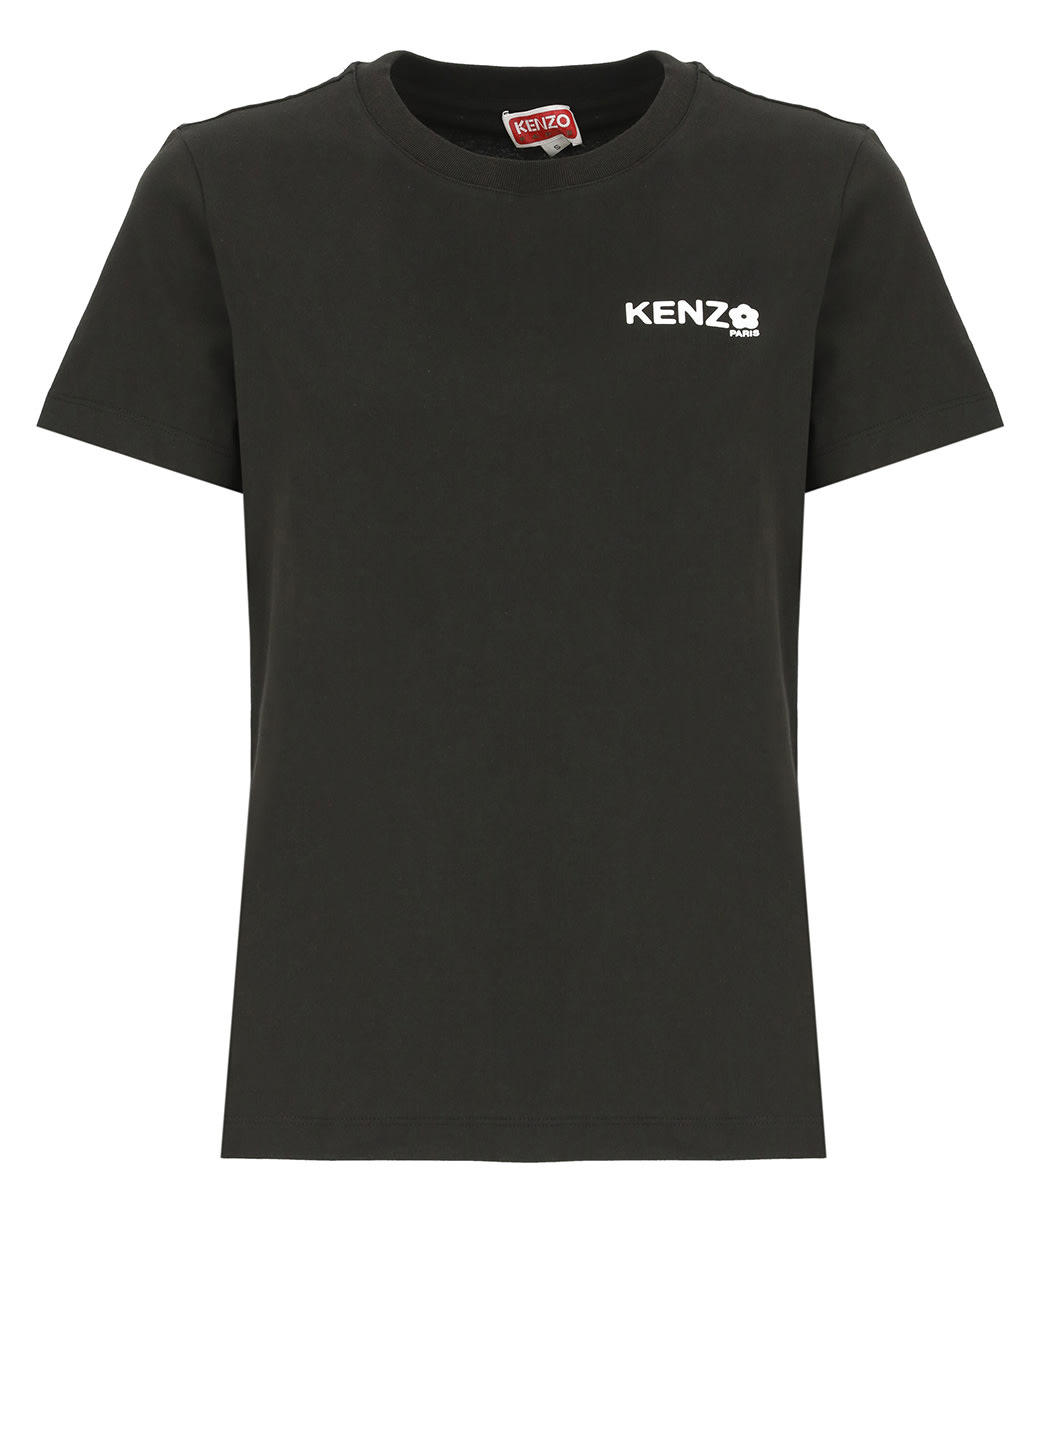 KENZO BOKE FLOWER 2.0 T-SHIRT